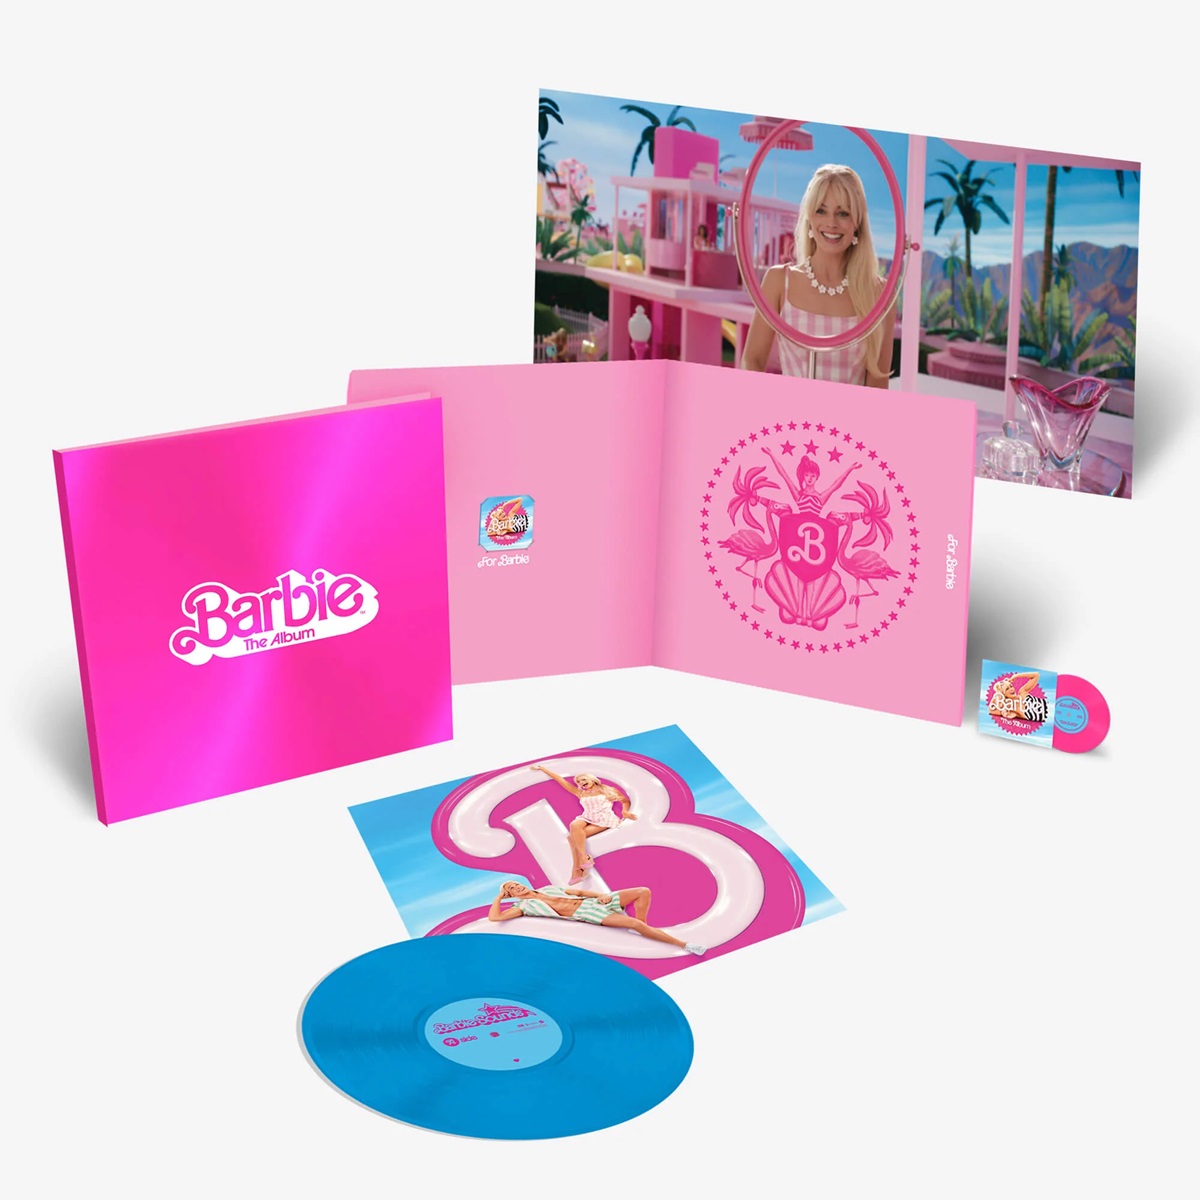 Barbie movie sound track on vinyl with tri fold album cover